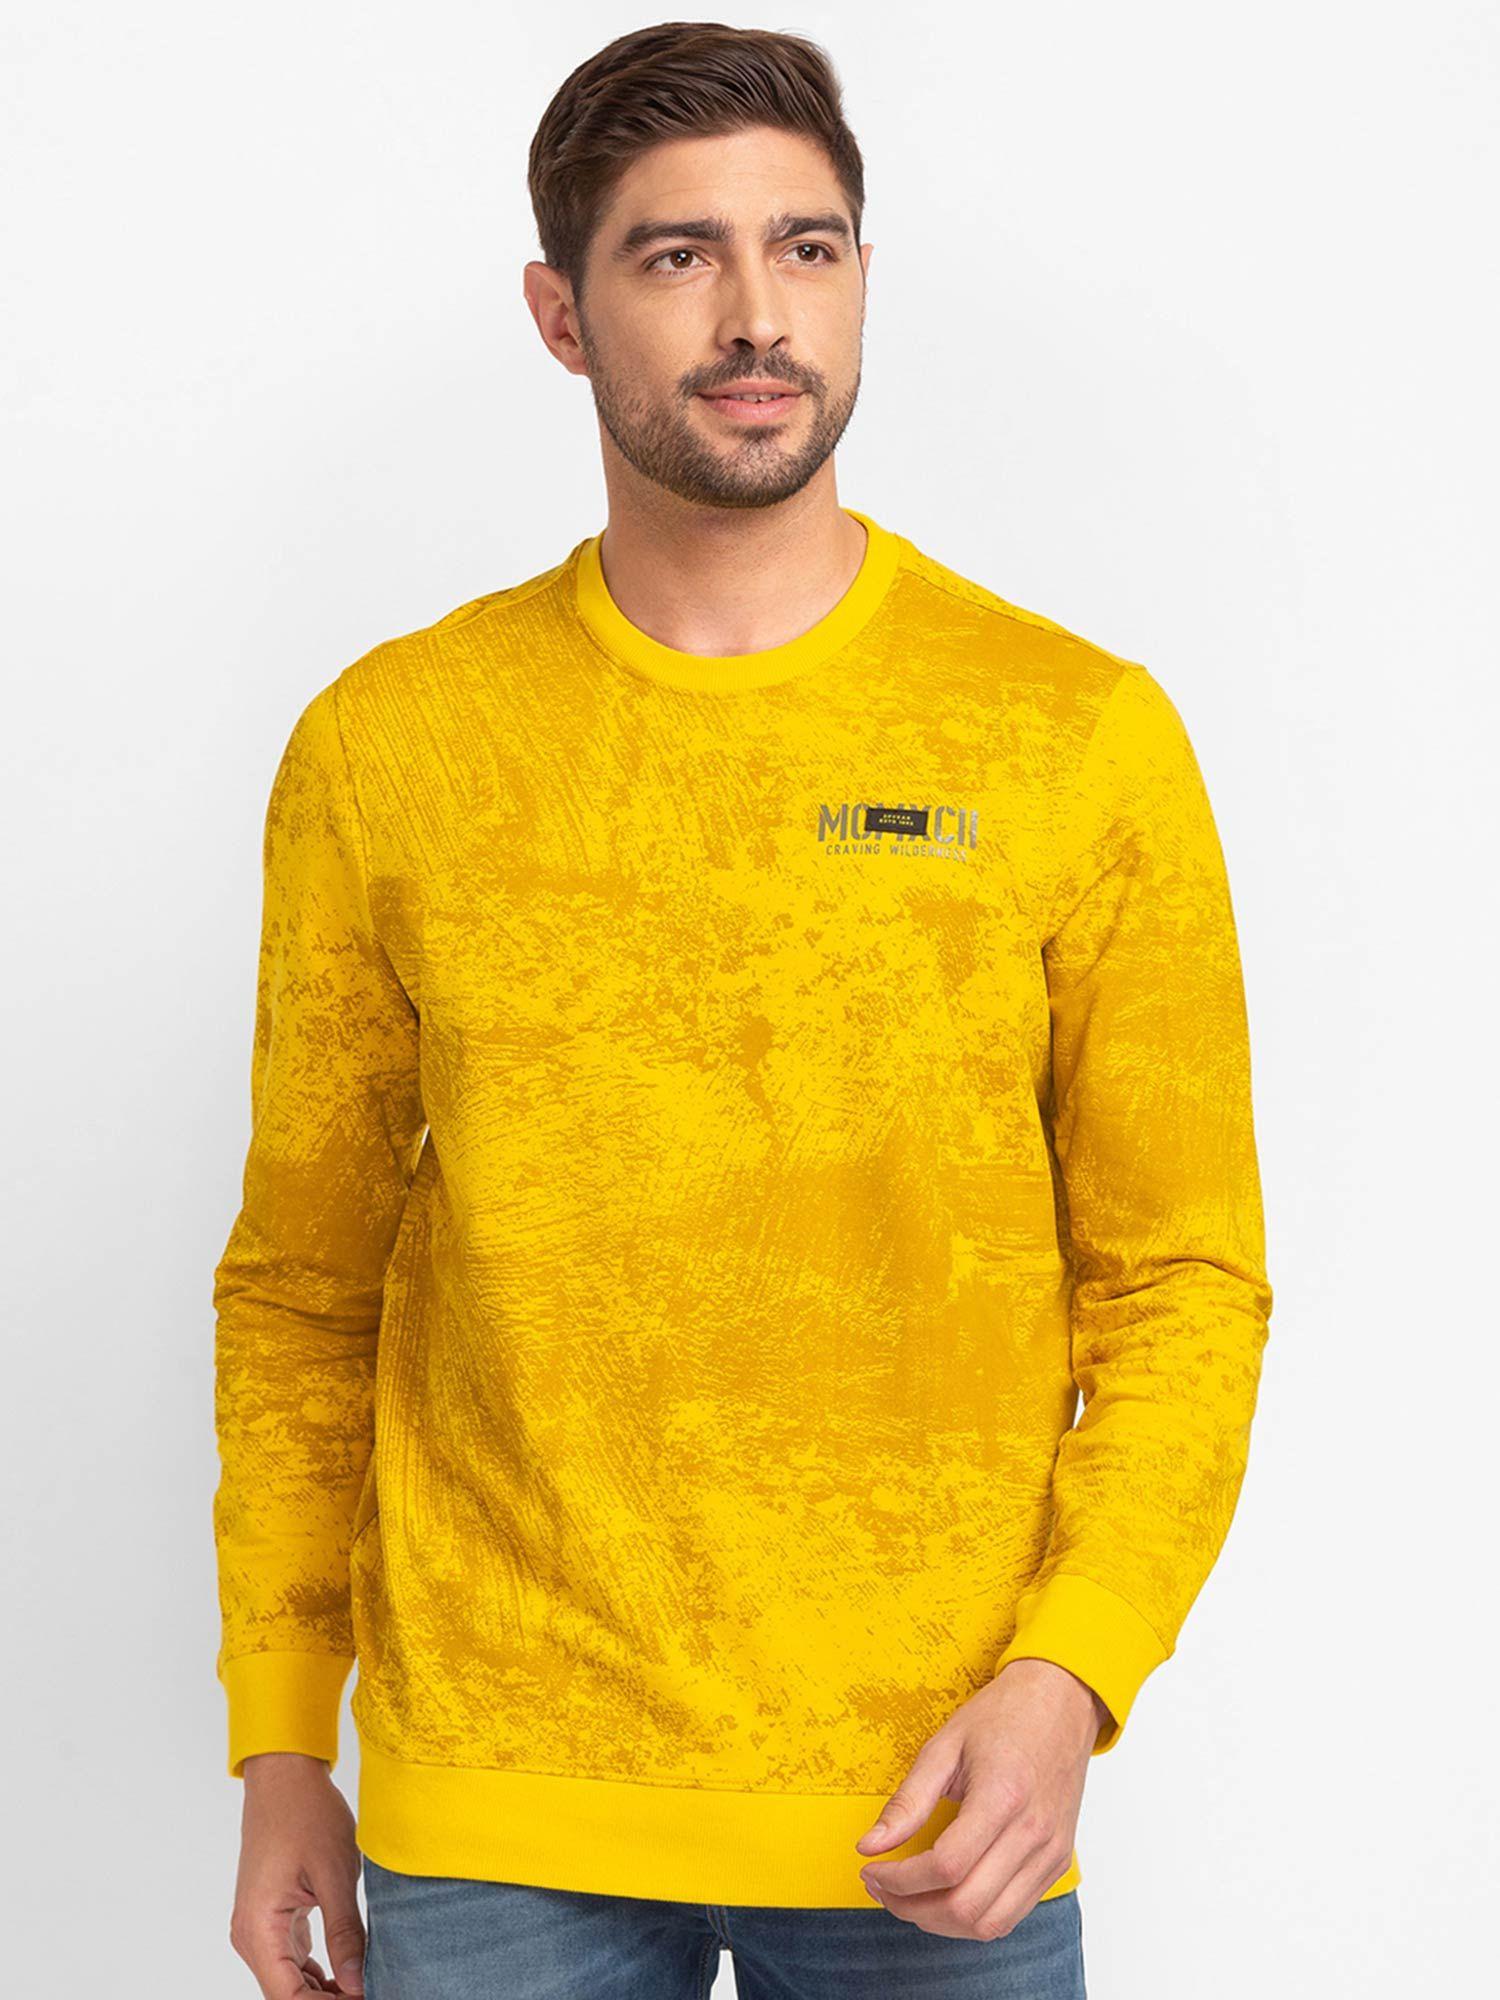 sulphur-yellow-cotton-full-sleeve-round-neck-sweatshirt-for-men